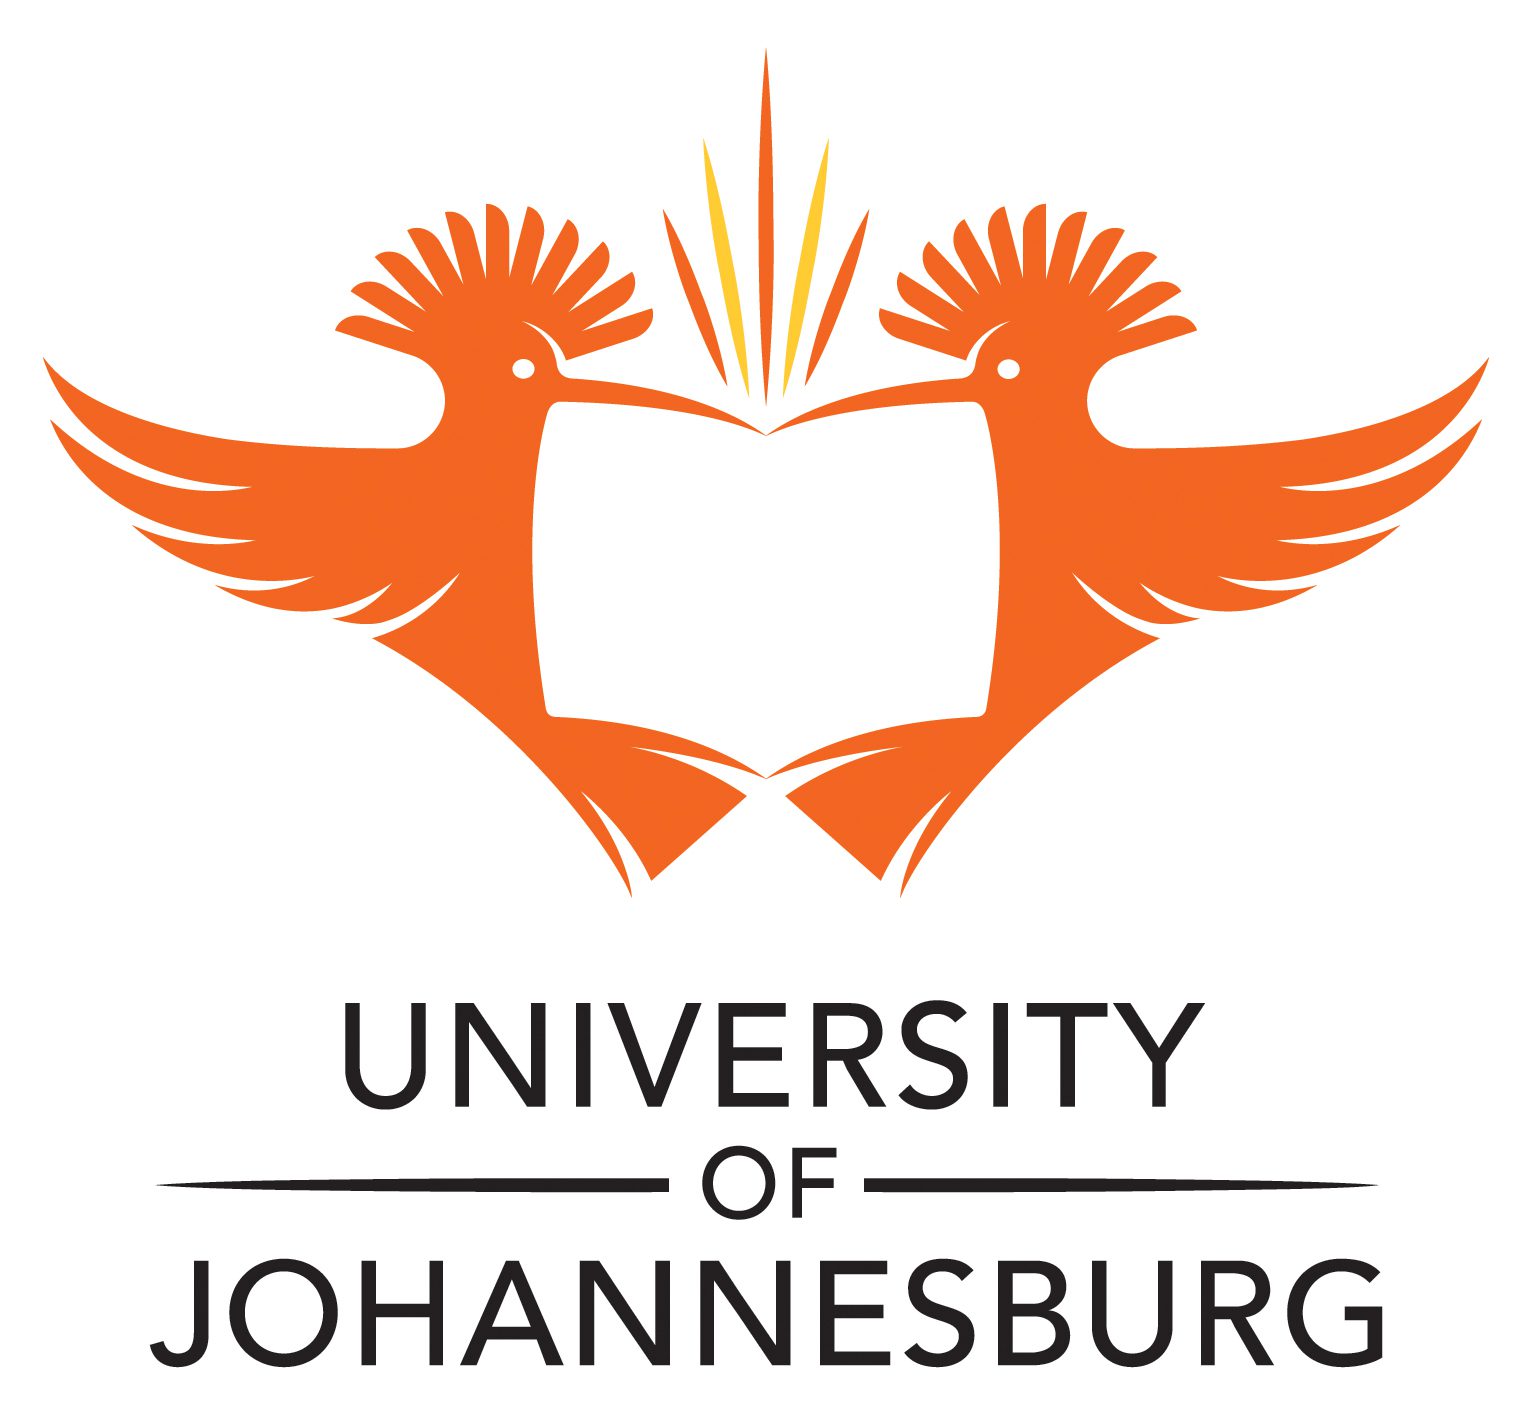 The University of Johannesburg